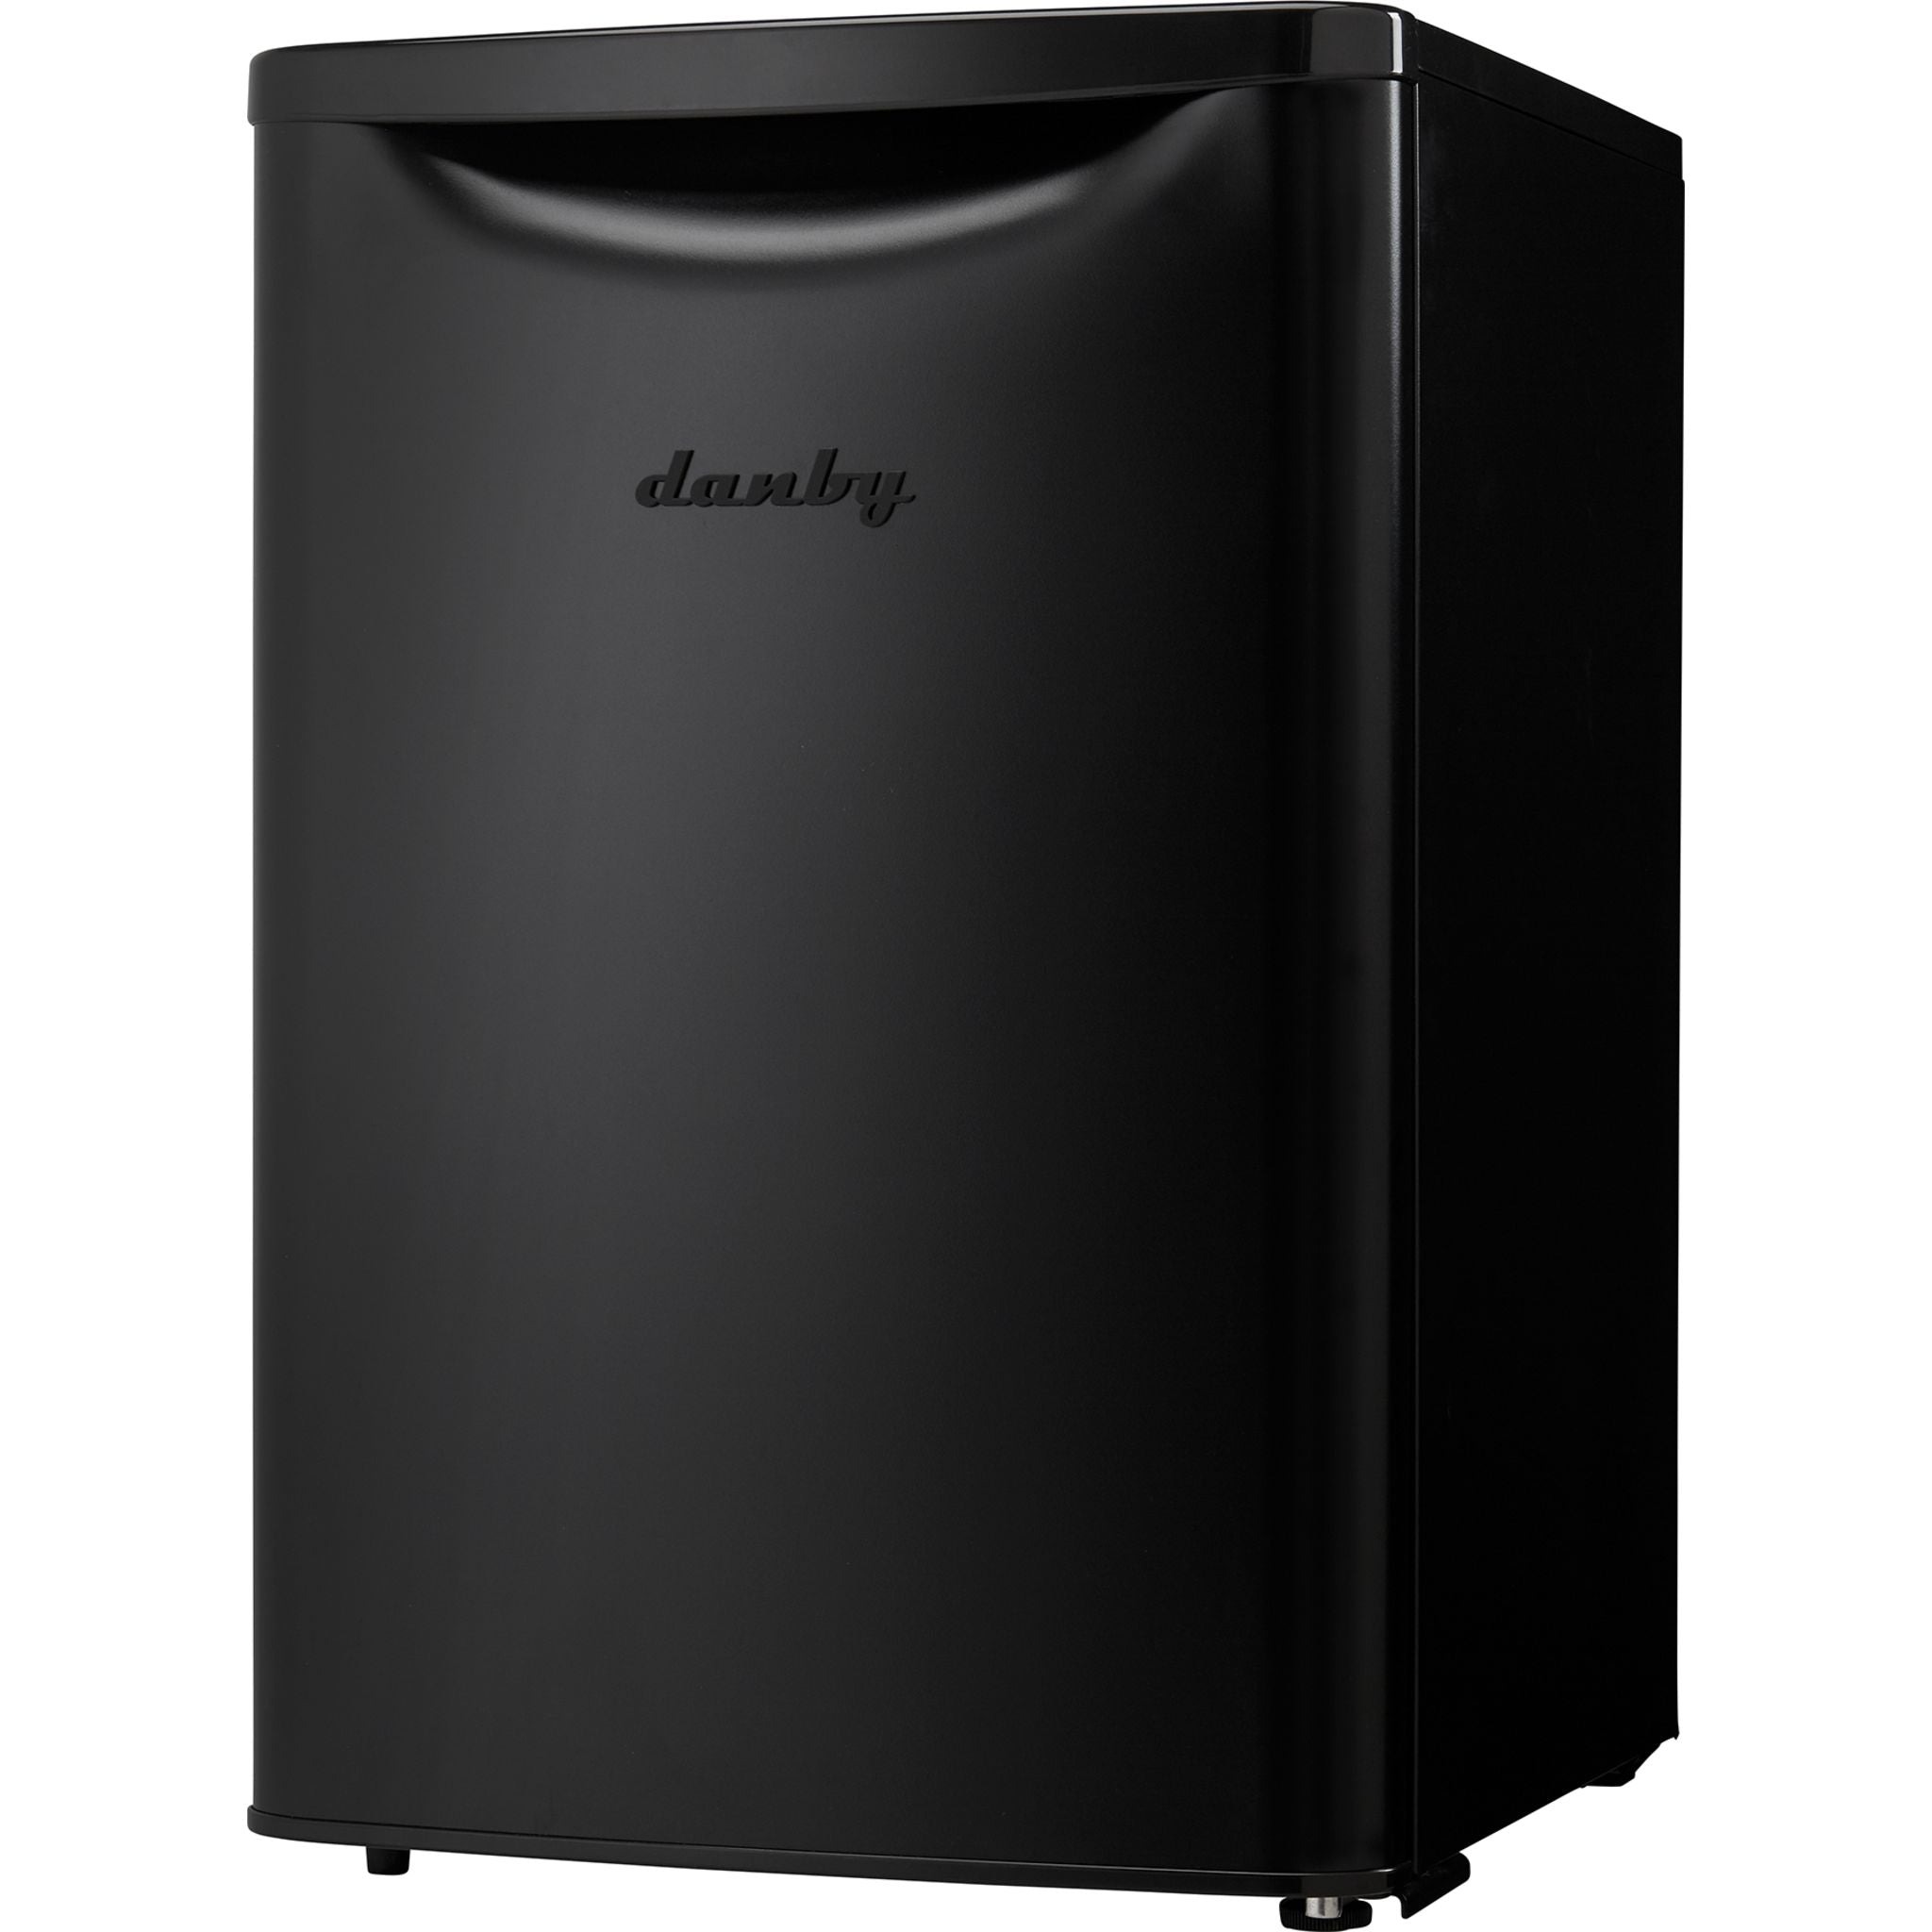 Danby, Danby Compact Fridge (DAR026A2BDB-6) - Black